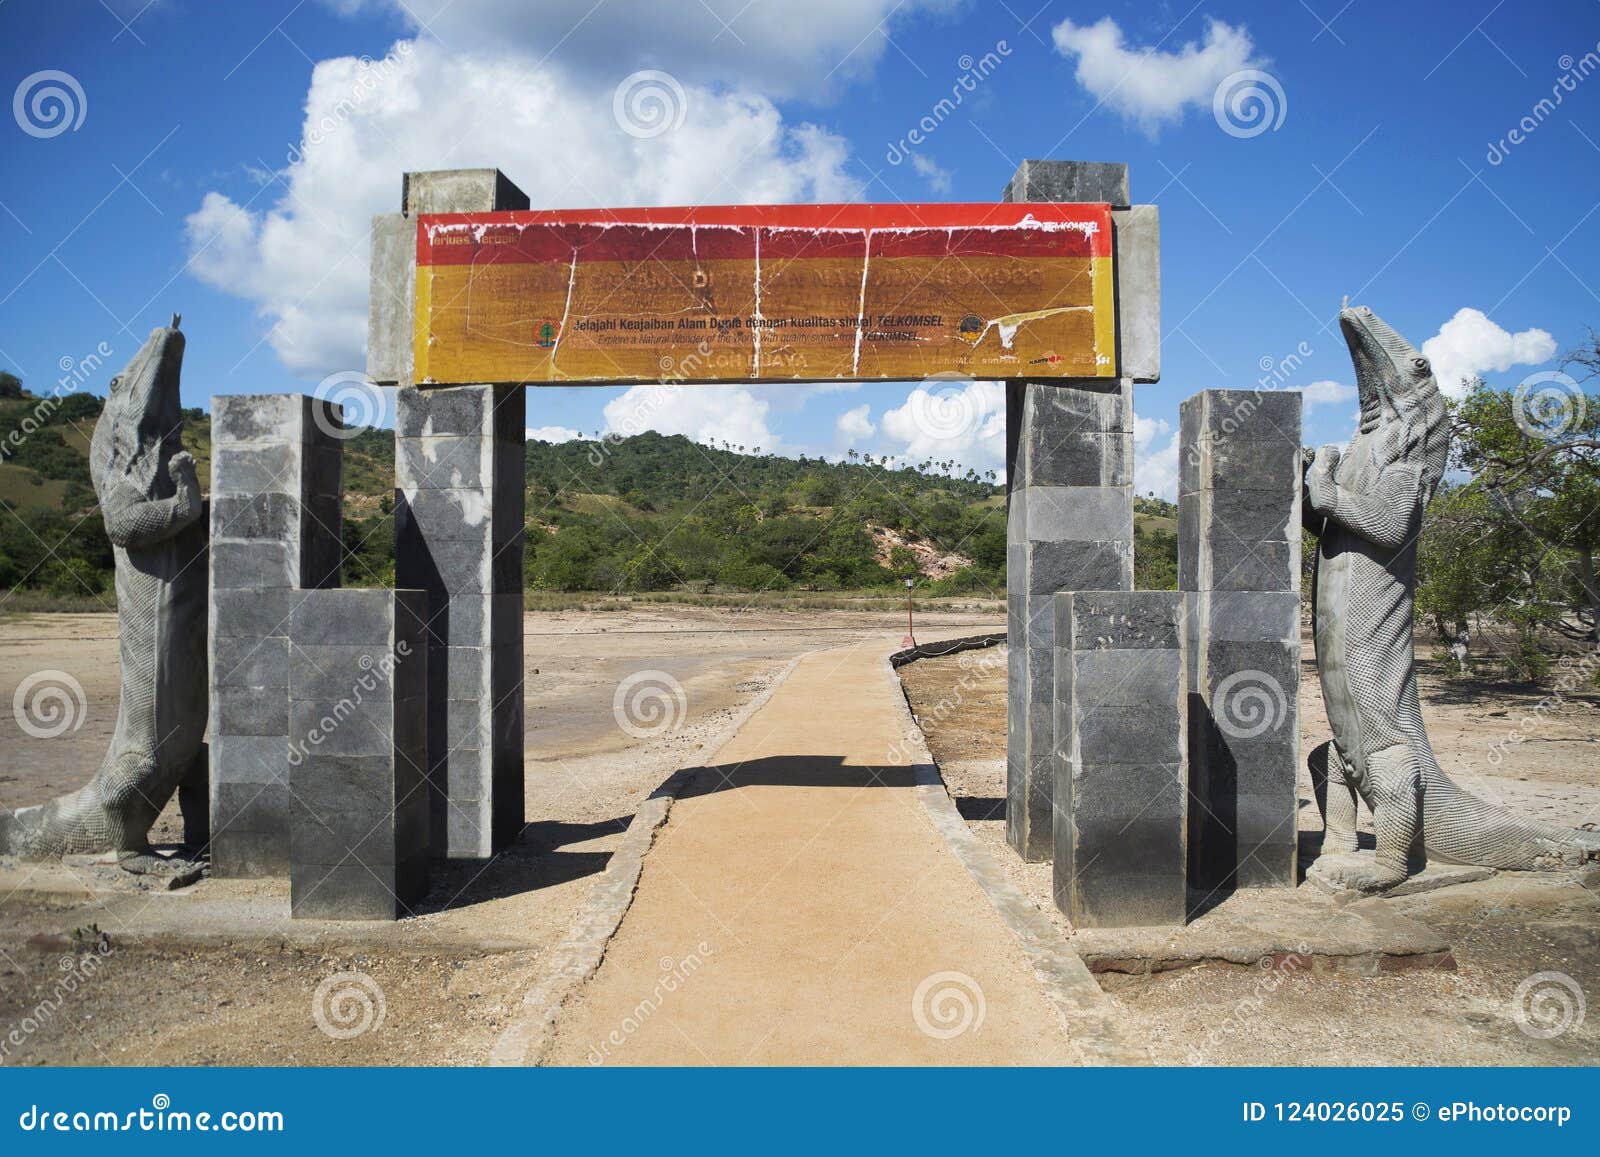 entrance gate of rinca island of indonesia